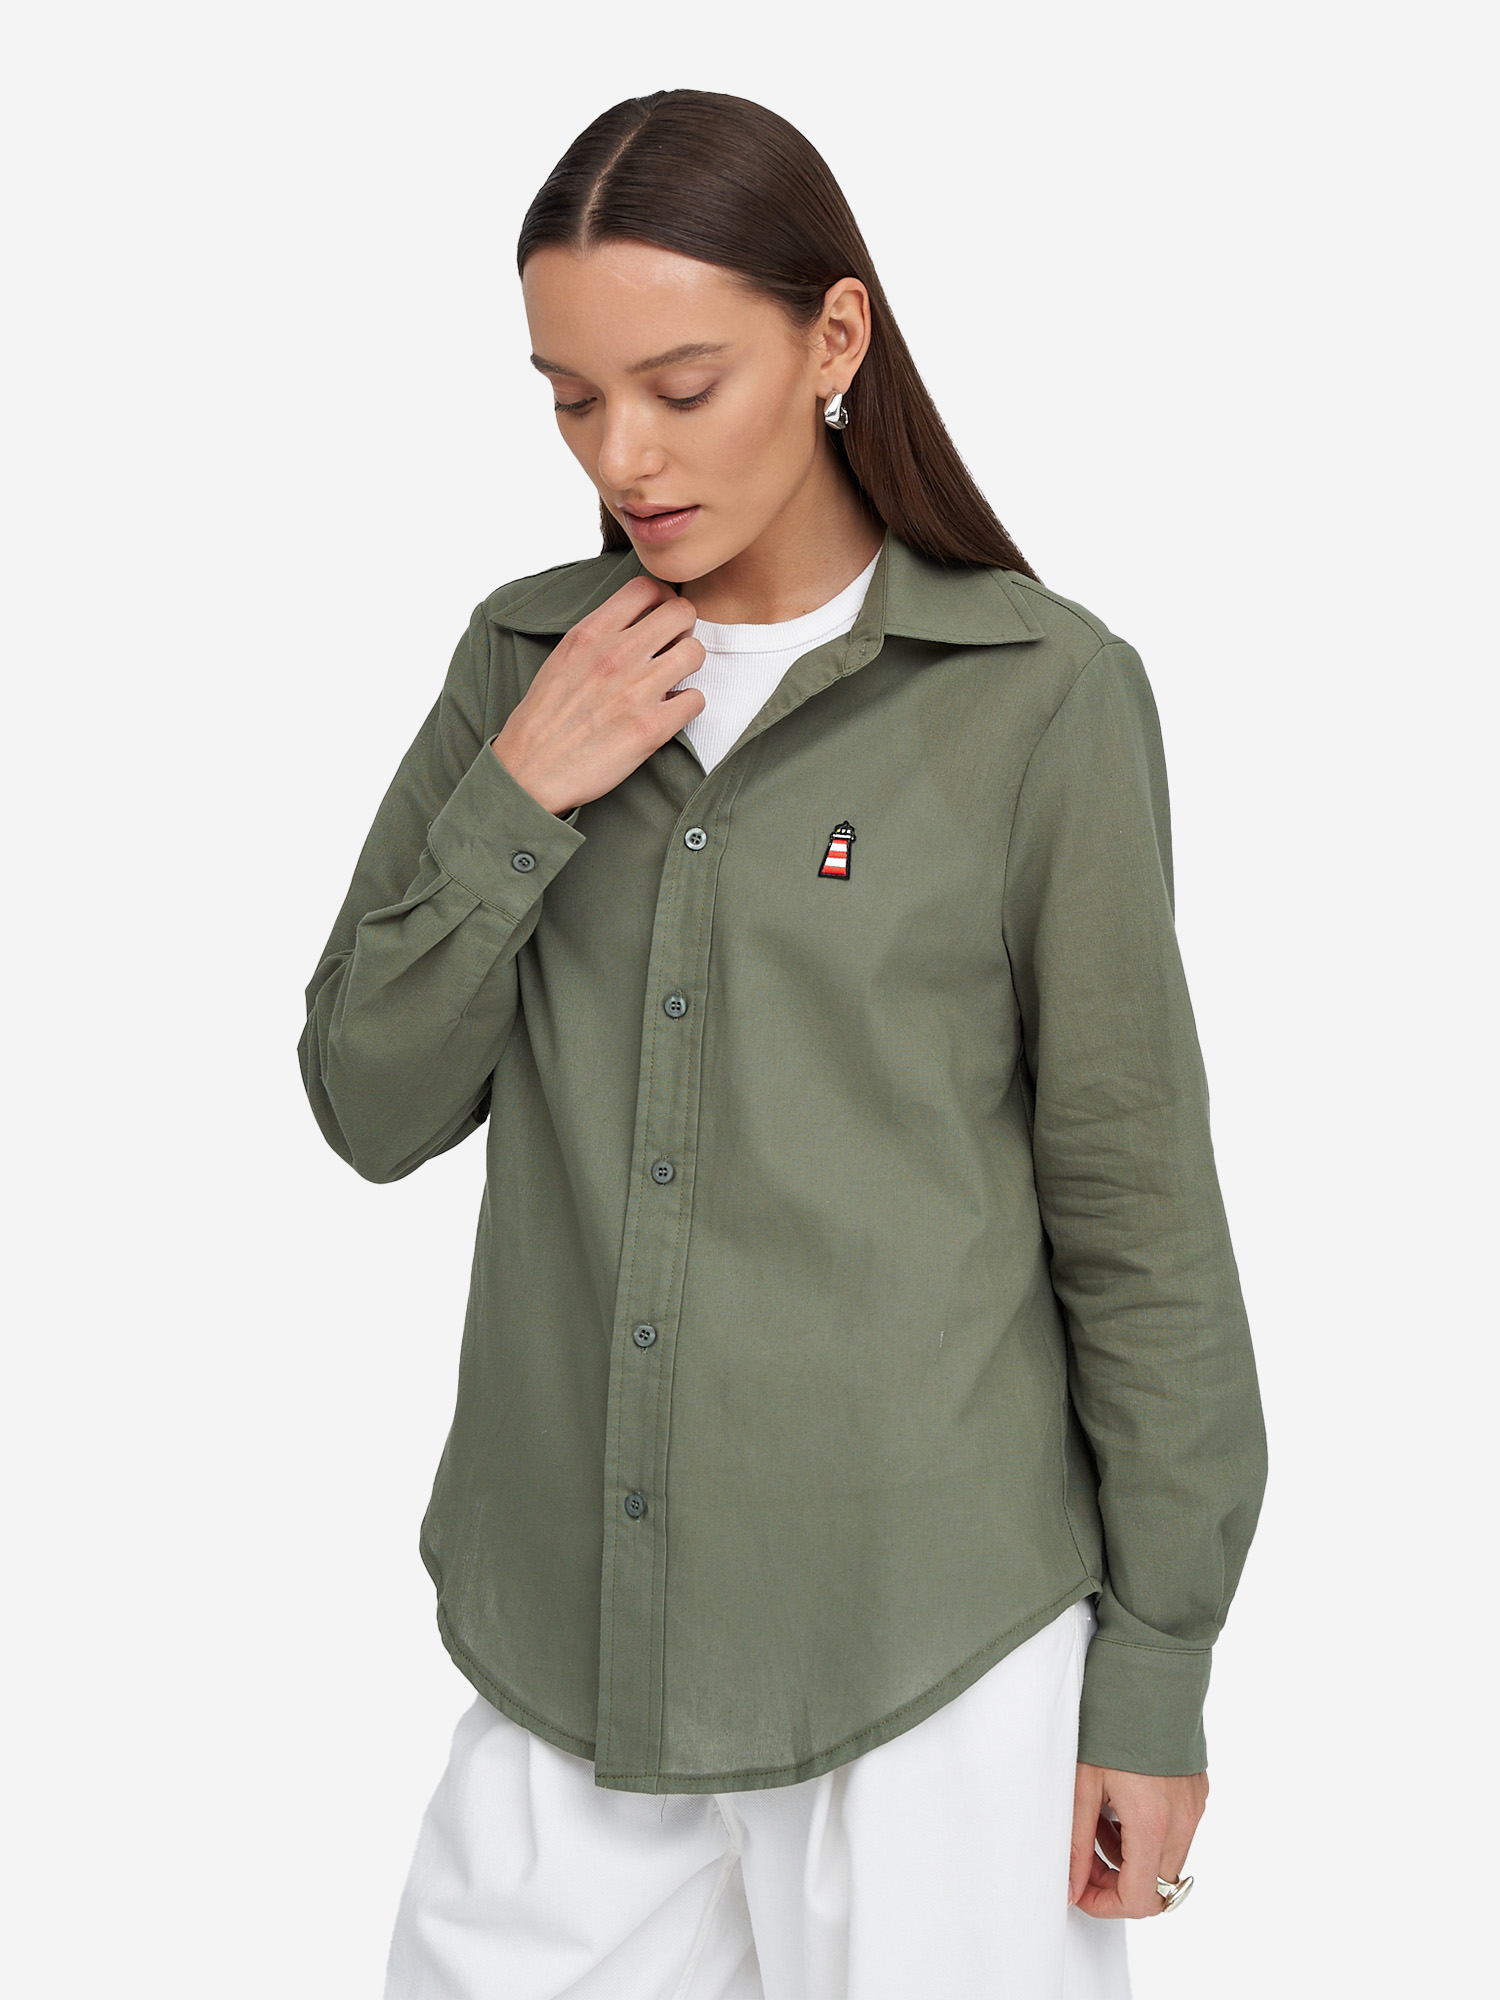 Kefirmaykifer Рубашка унисекс хлопковая хаки, Зеленый